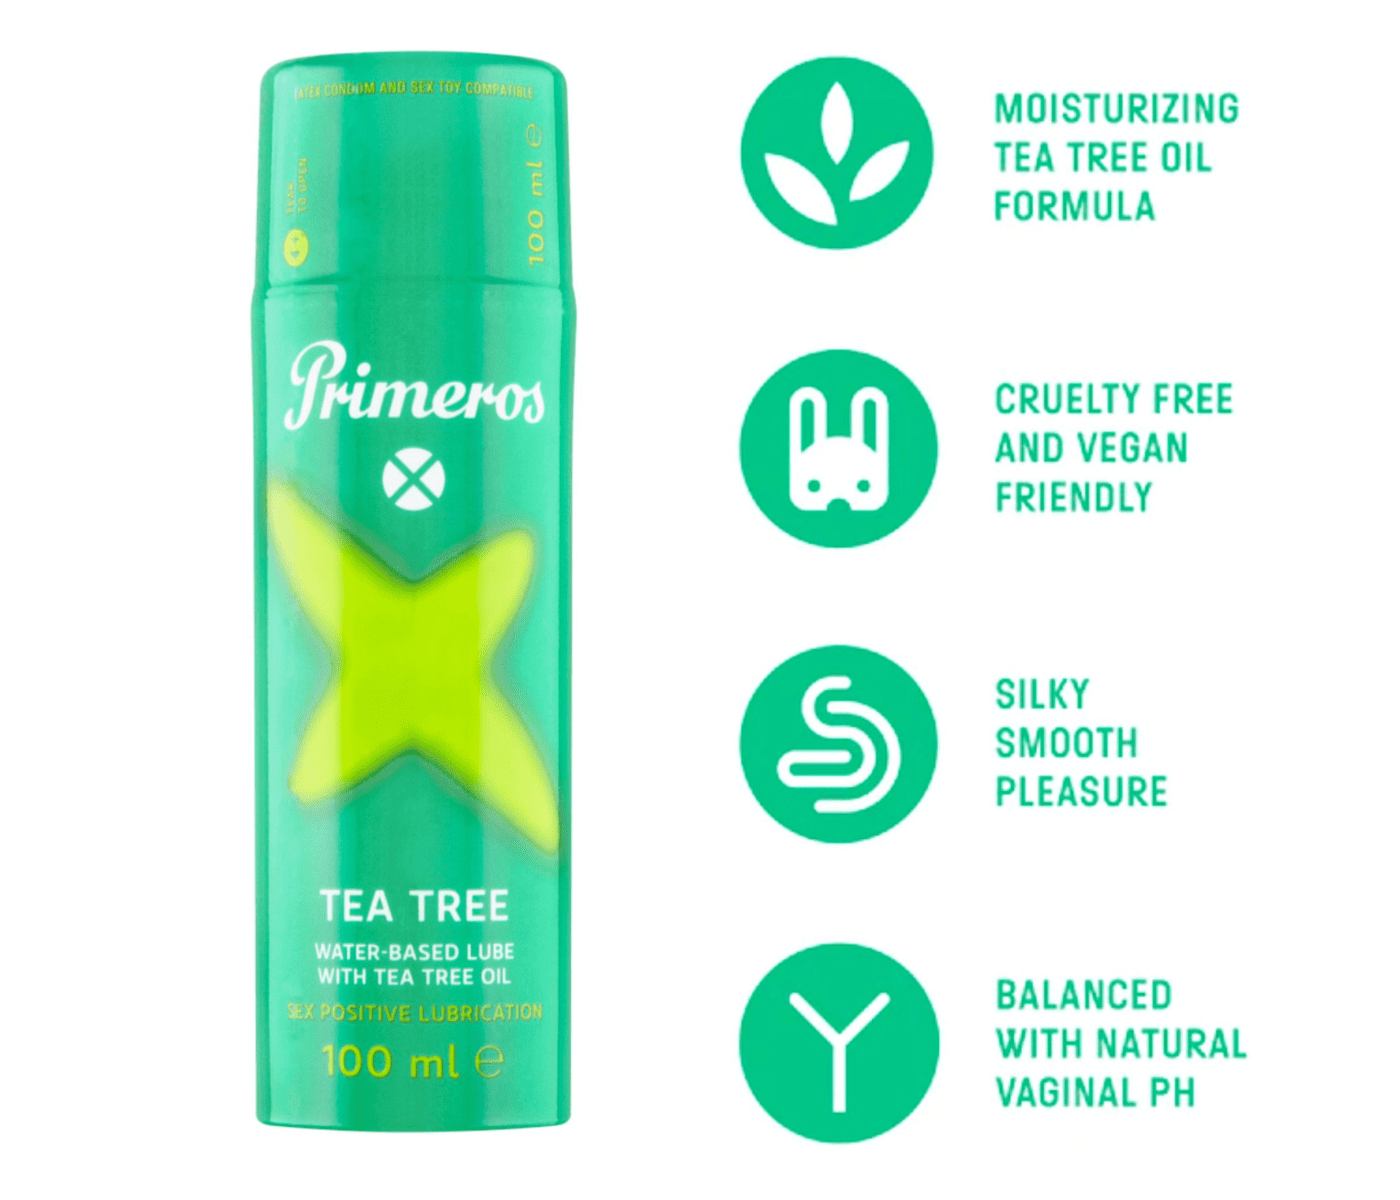 Primeros lubrikant Tea Tree, kondomy Tea Tree a vibrační kroužek jako dárek zdarma